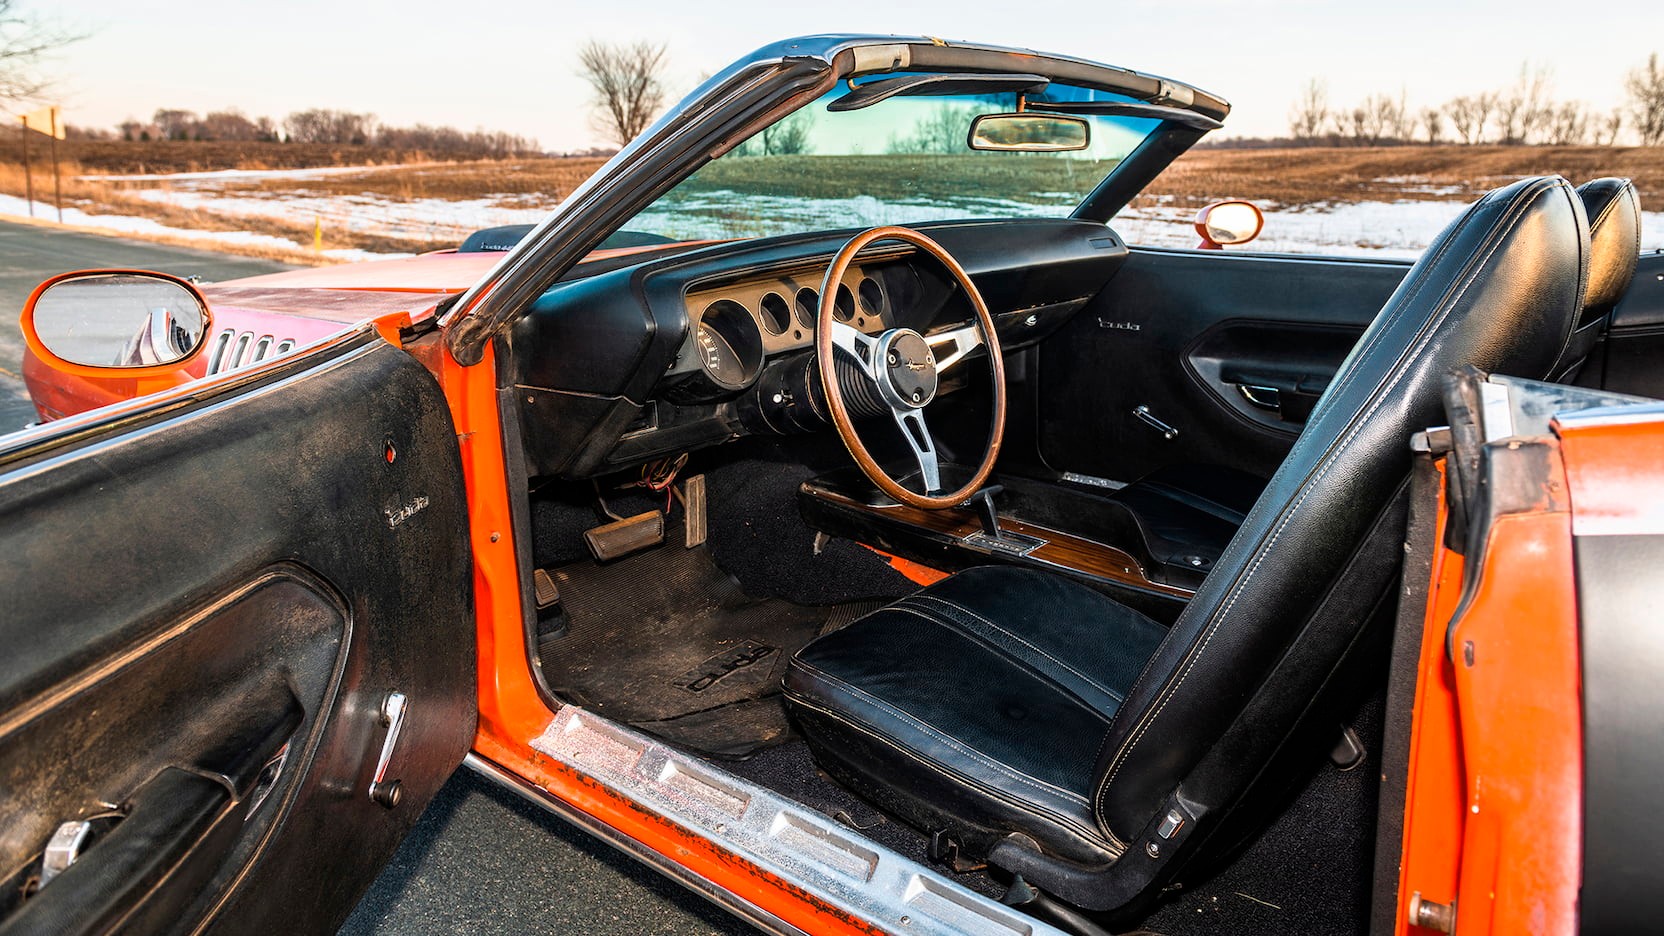 Ржавый американский автомобиль 70-х продают по цене двух Lamborghini 4